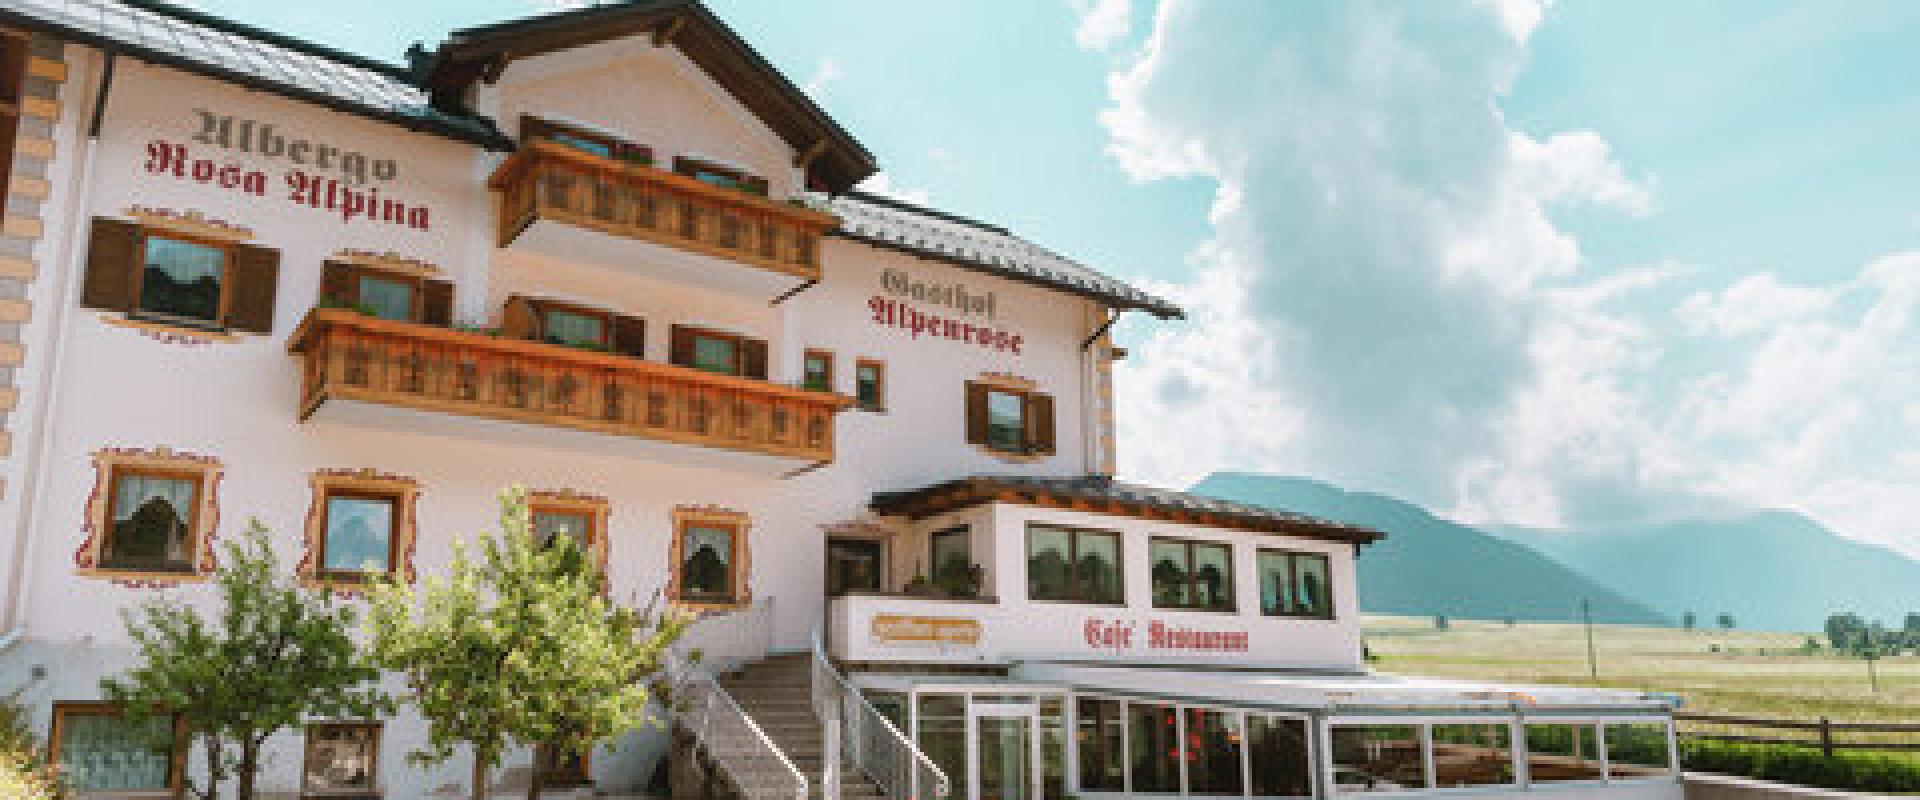 30090 Biker Hotel Alpenrose in Südtirol/Dolomiten.jpg